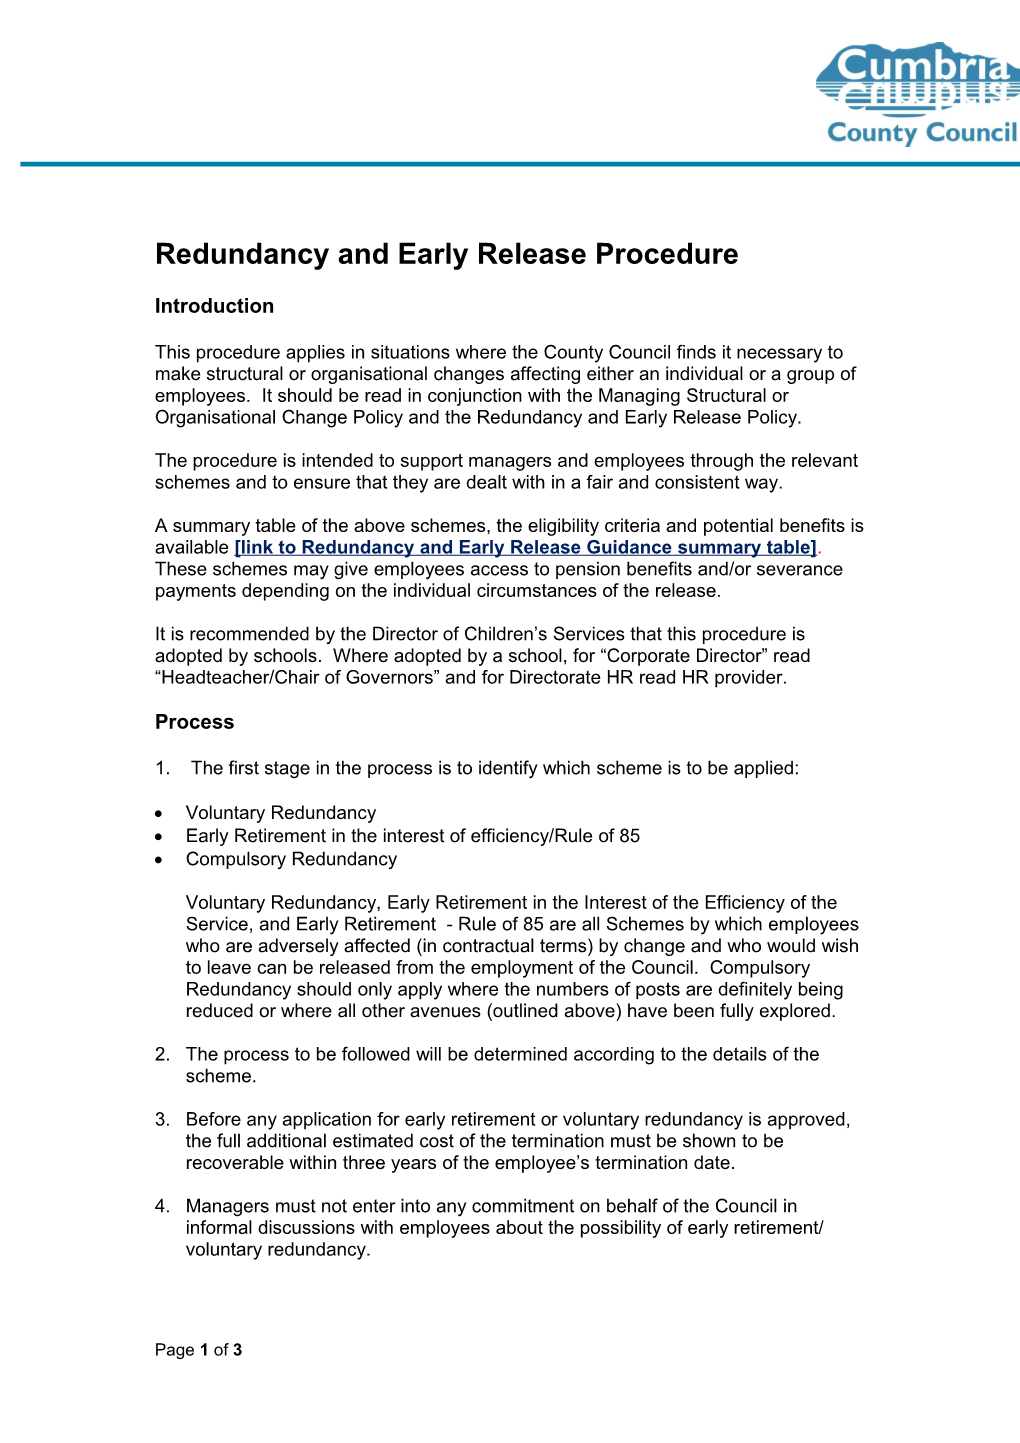 Early Retirement/ Voluntary Redundancy Policy